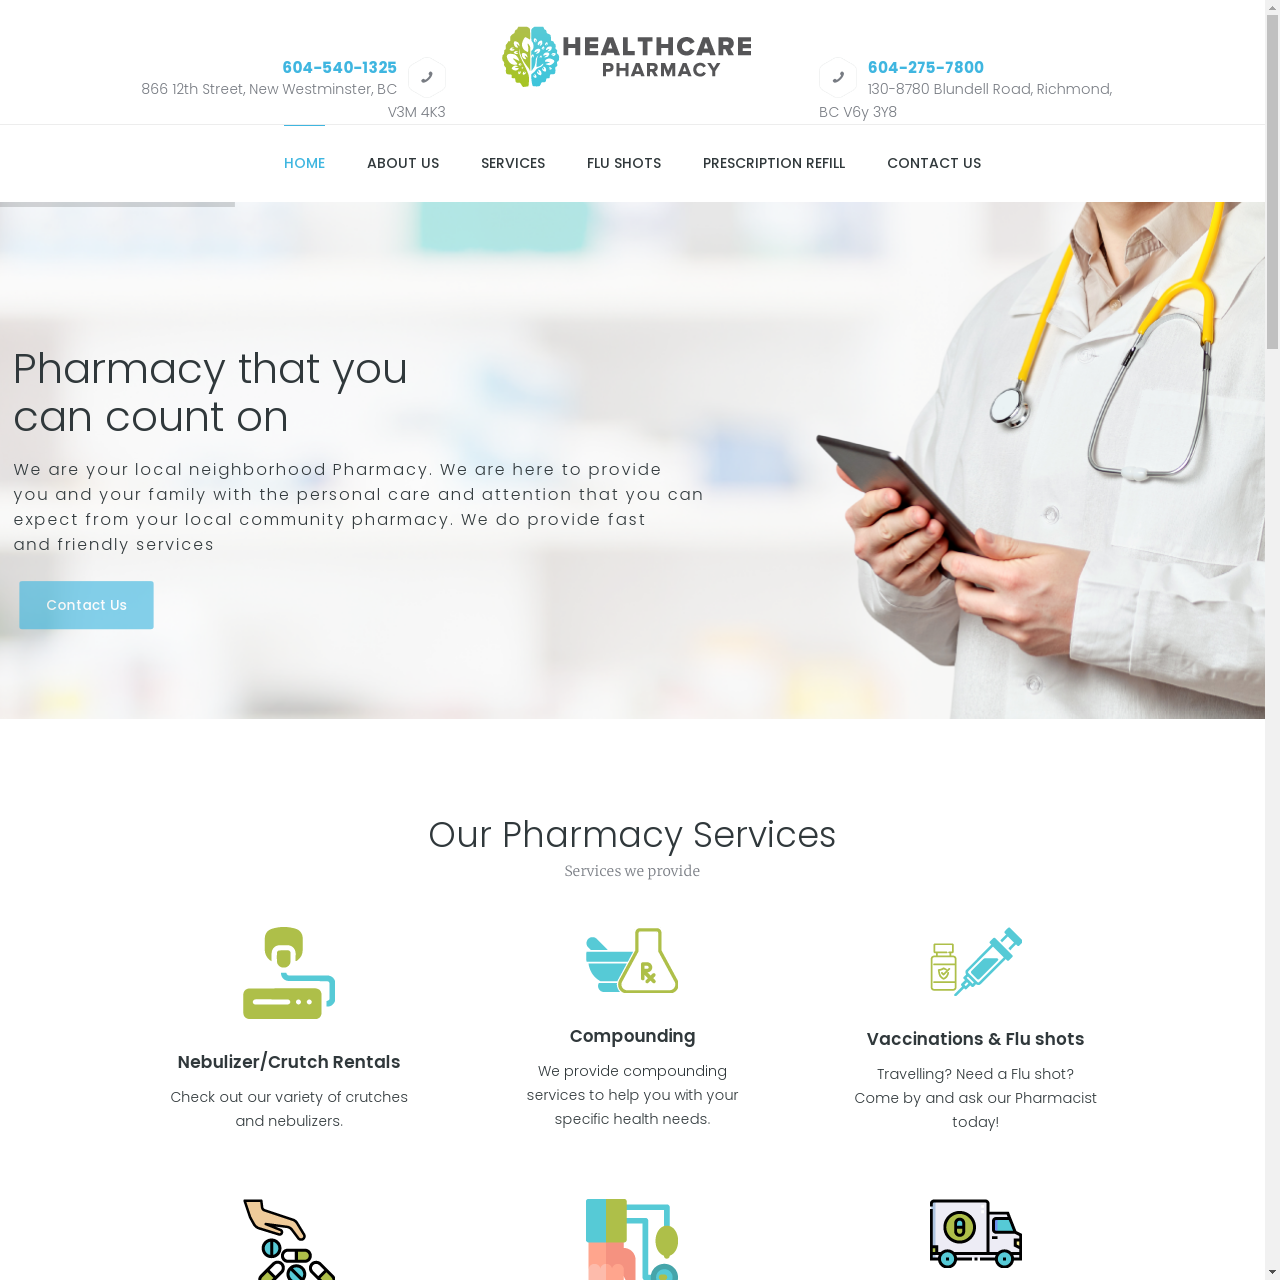 Healthcare Pharmacy – Web Design